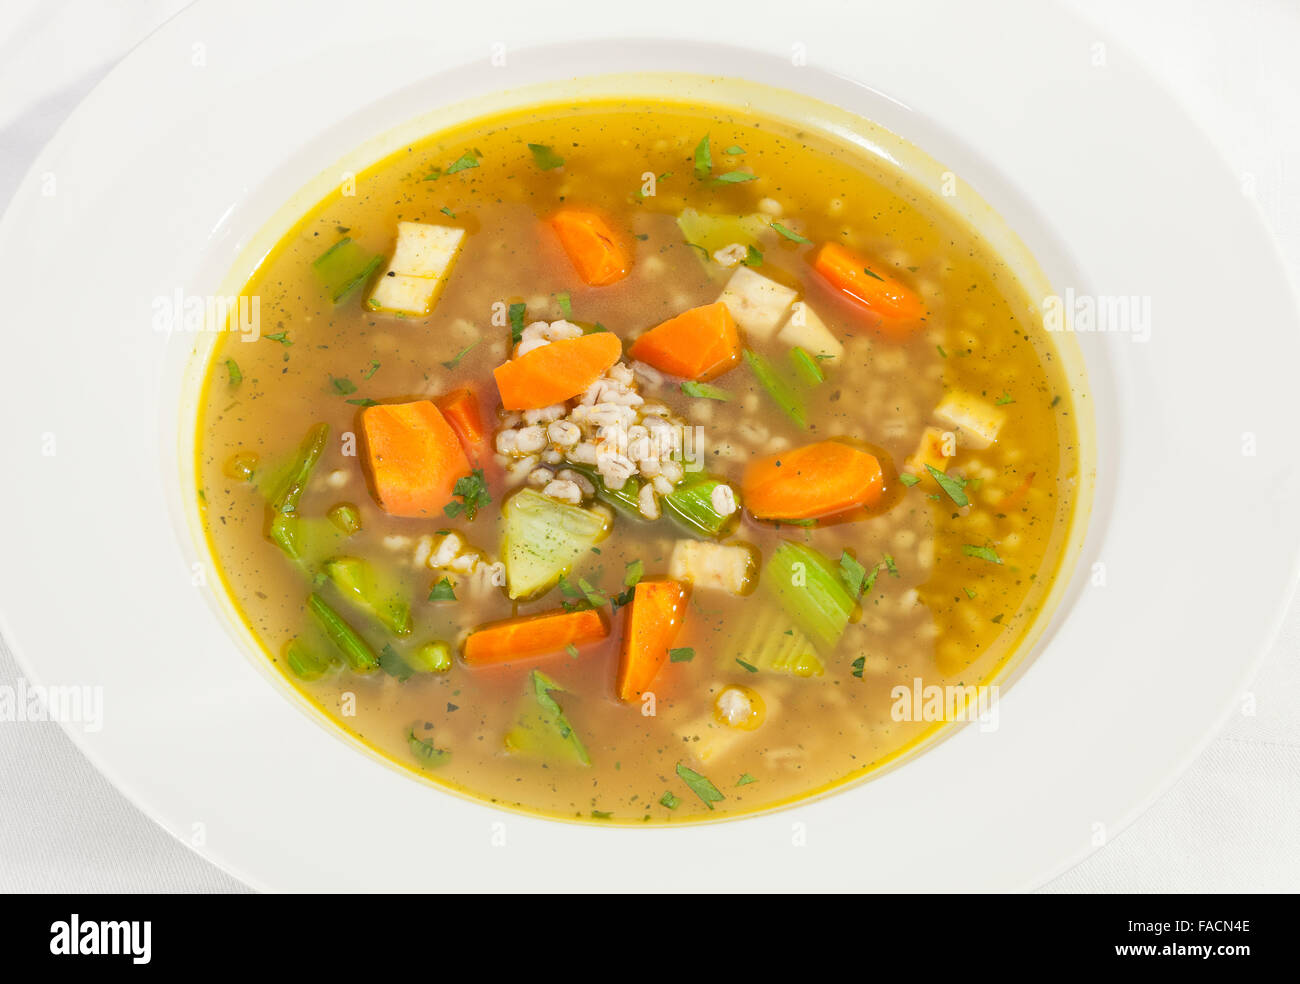 Vegetable soup w carrot, leek and celery stalks Stock Photo